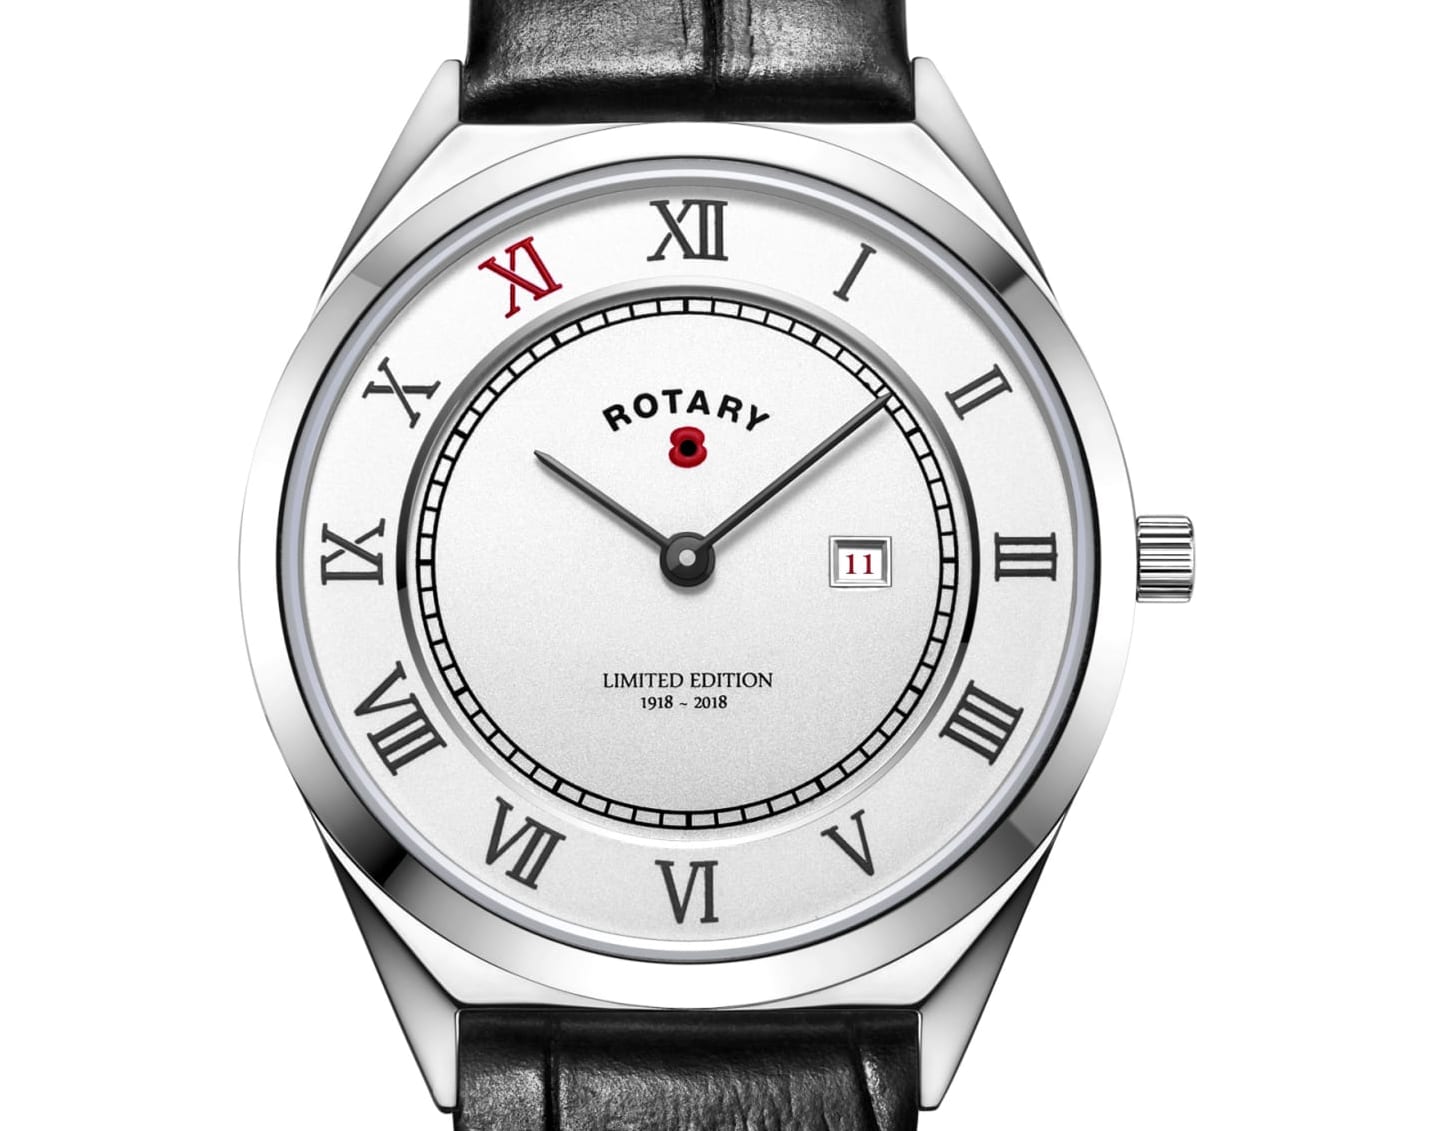 Fww limited edition centenary watch 2 e1545908307129